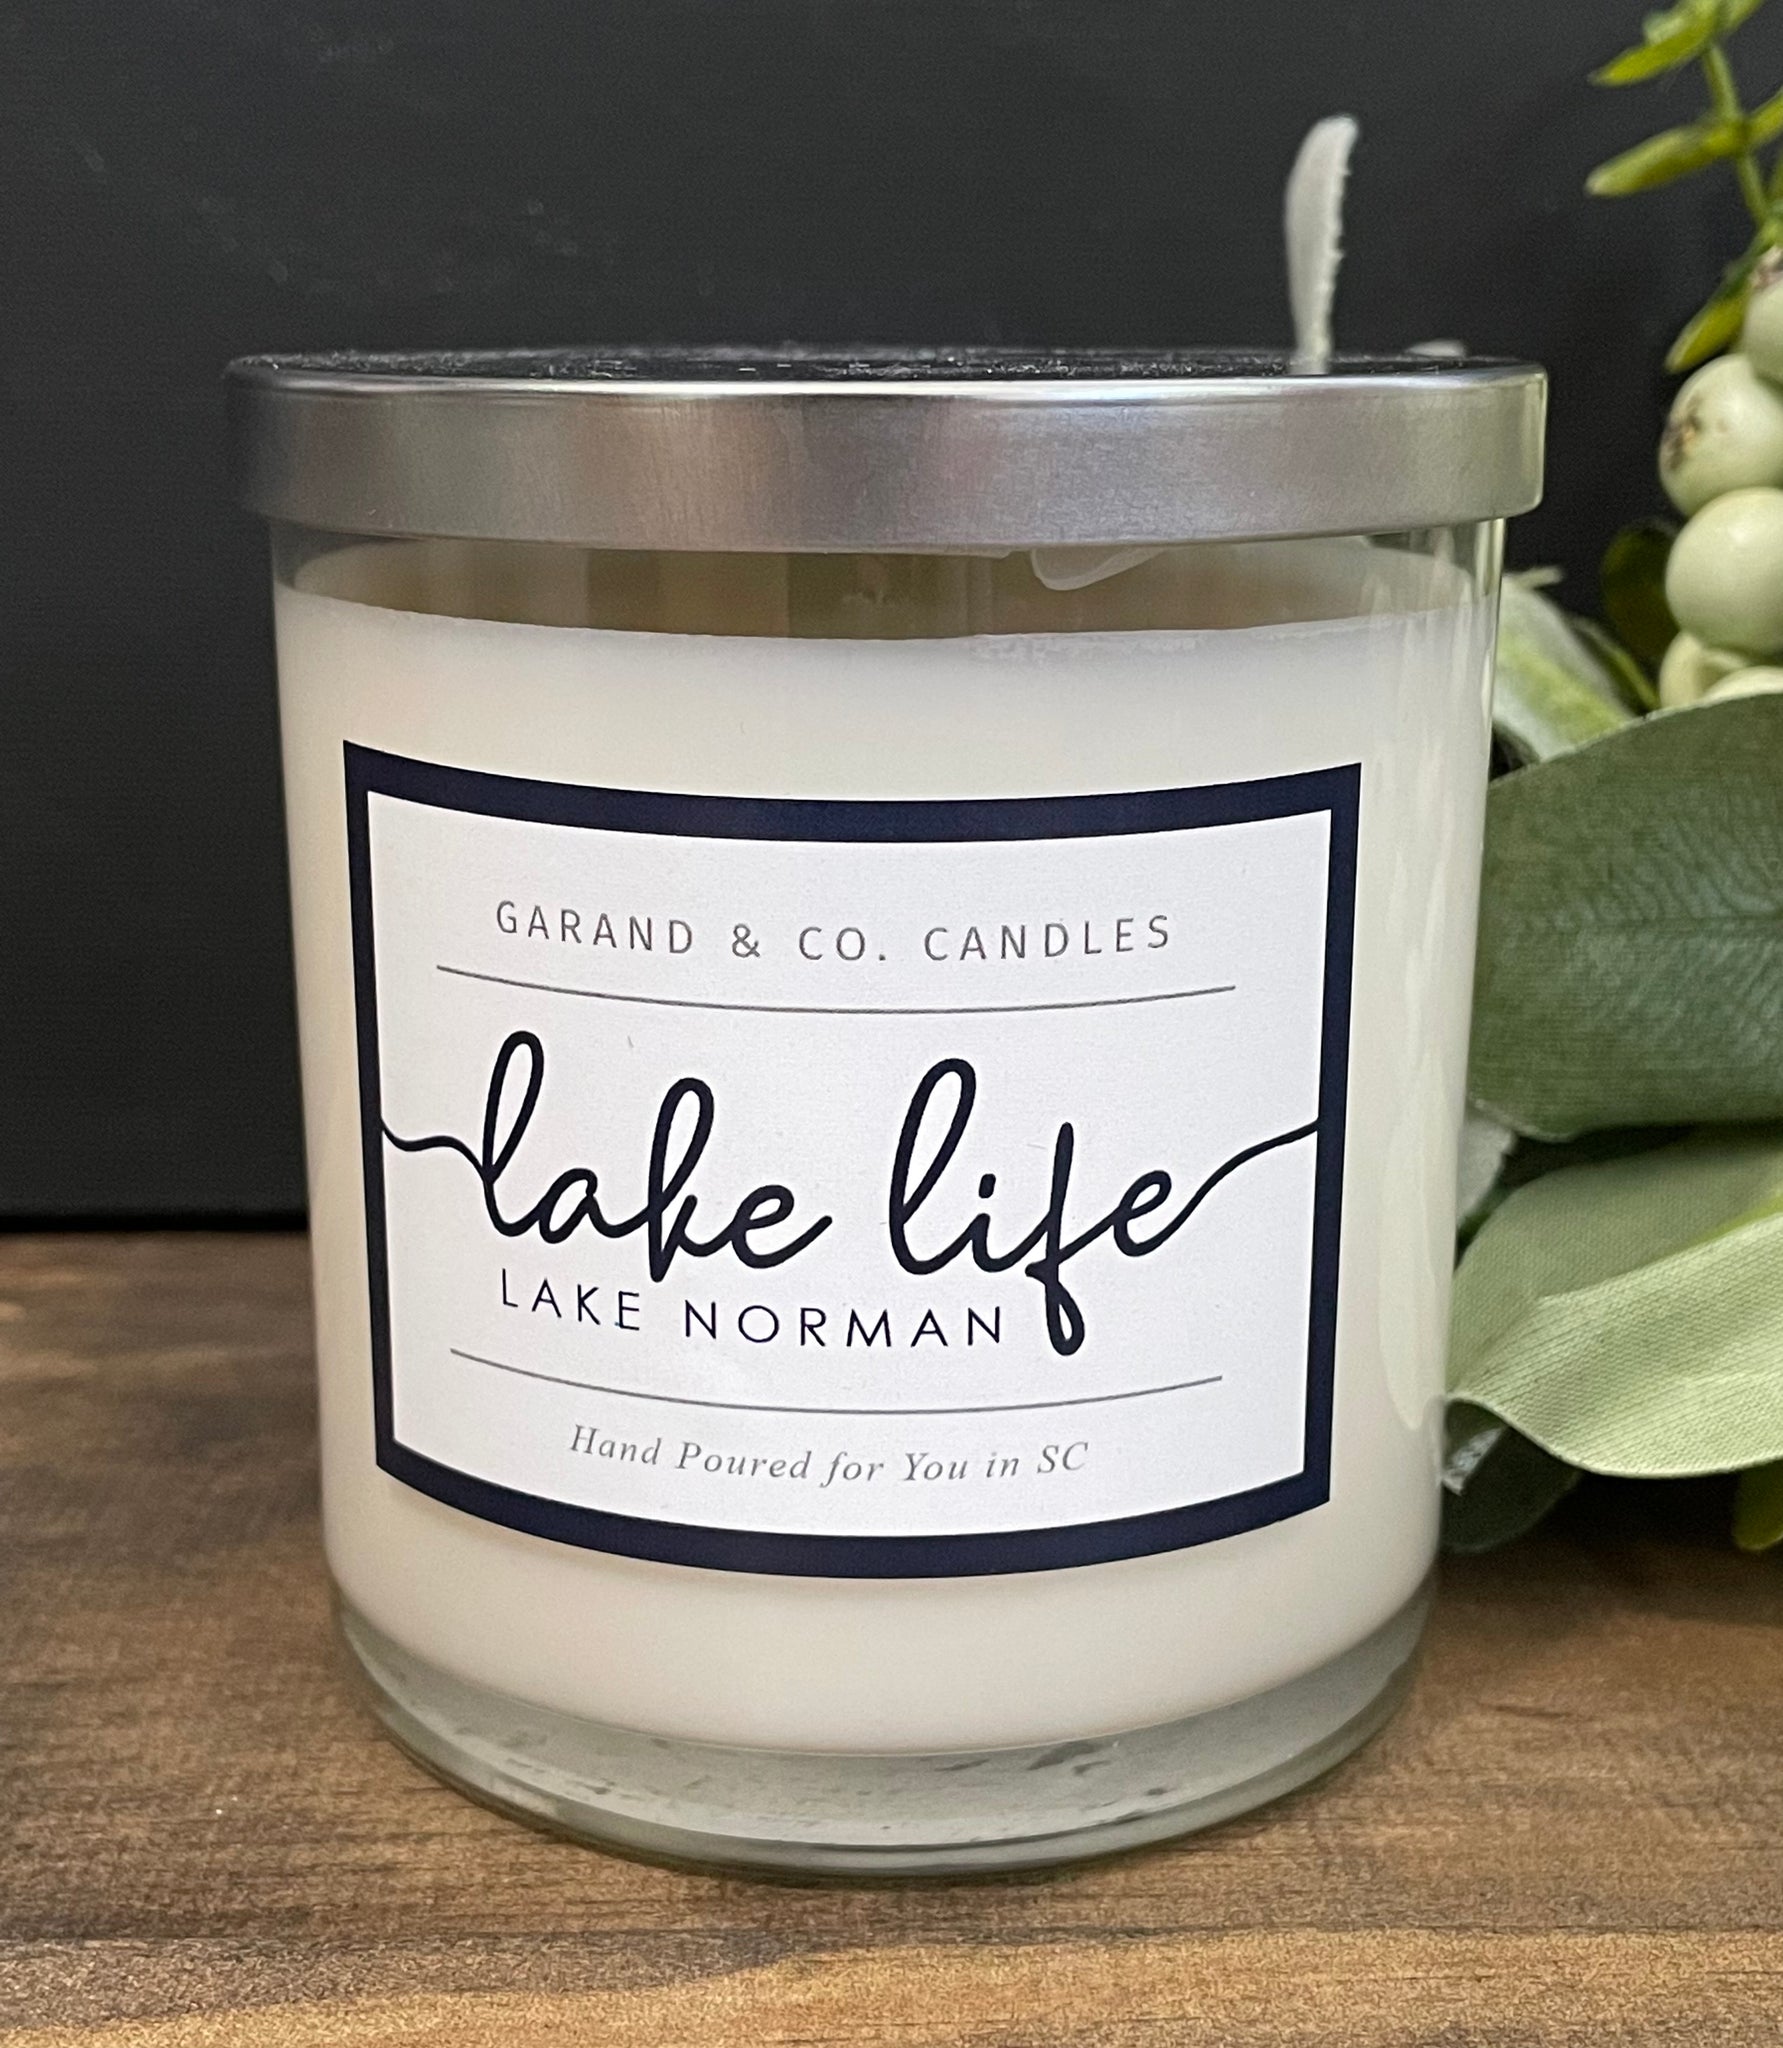 12 oz Clear Glass Jar Candle - Lake Life Lake Norman